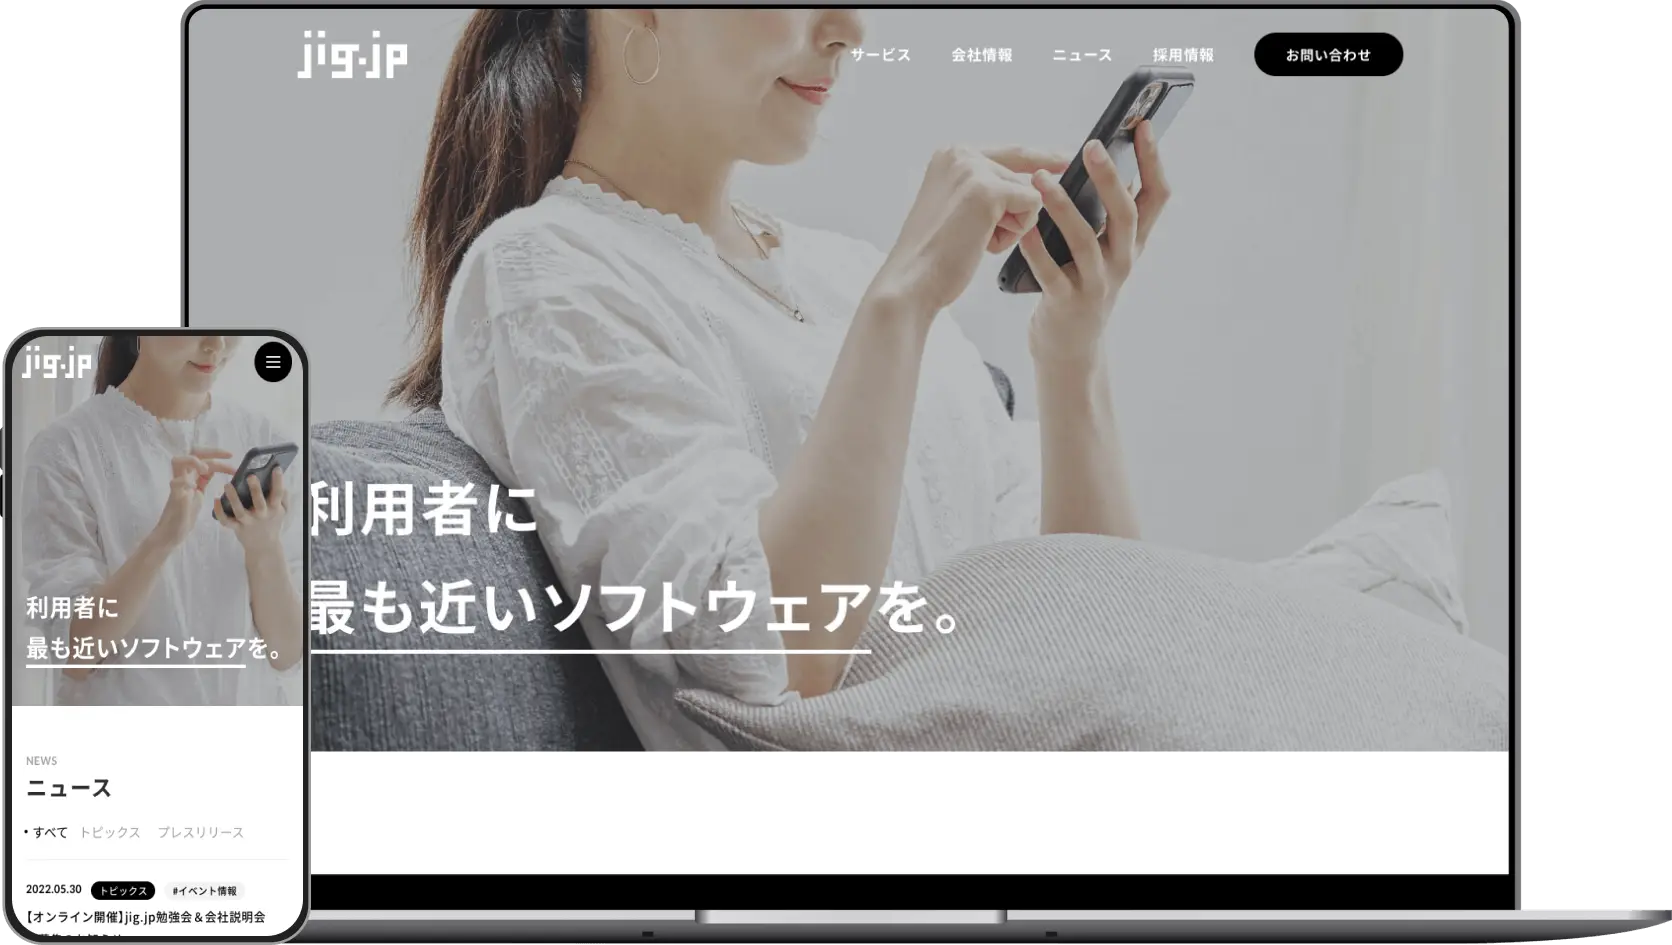 jig.jp - コーポレートサイト